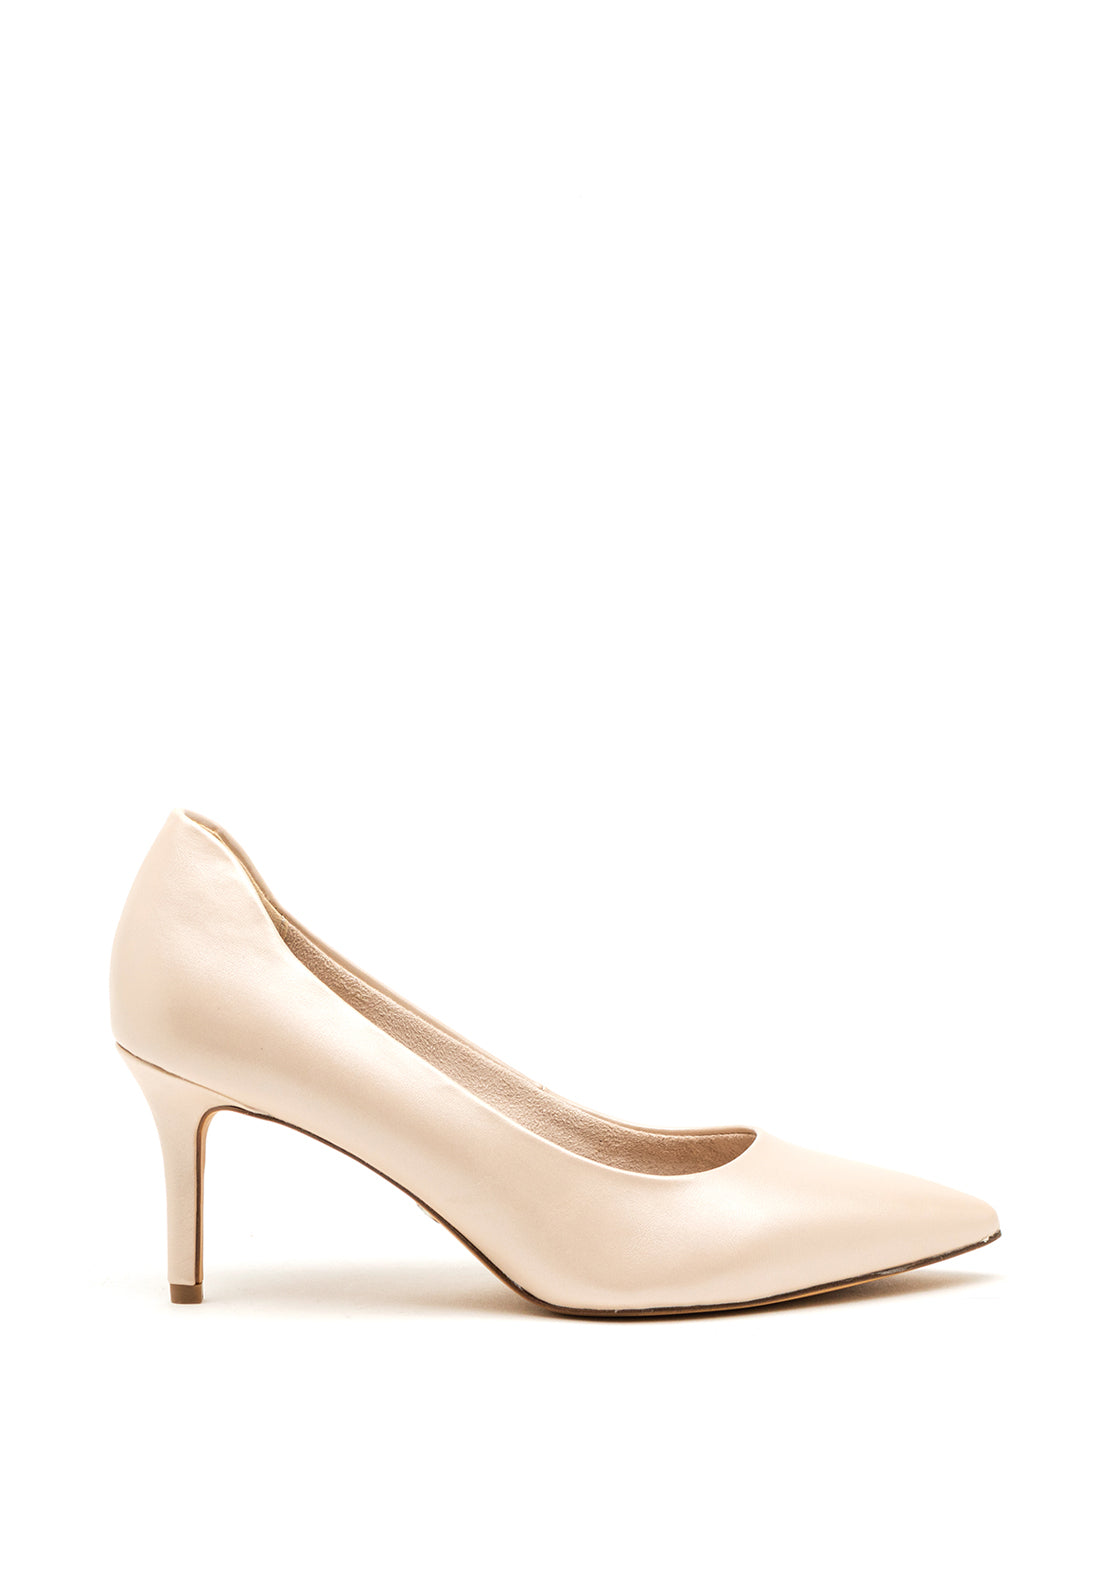 Tamaris Pointed Toe Low Heel Court Shoes, Pearl Pink - McElhinneys